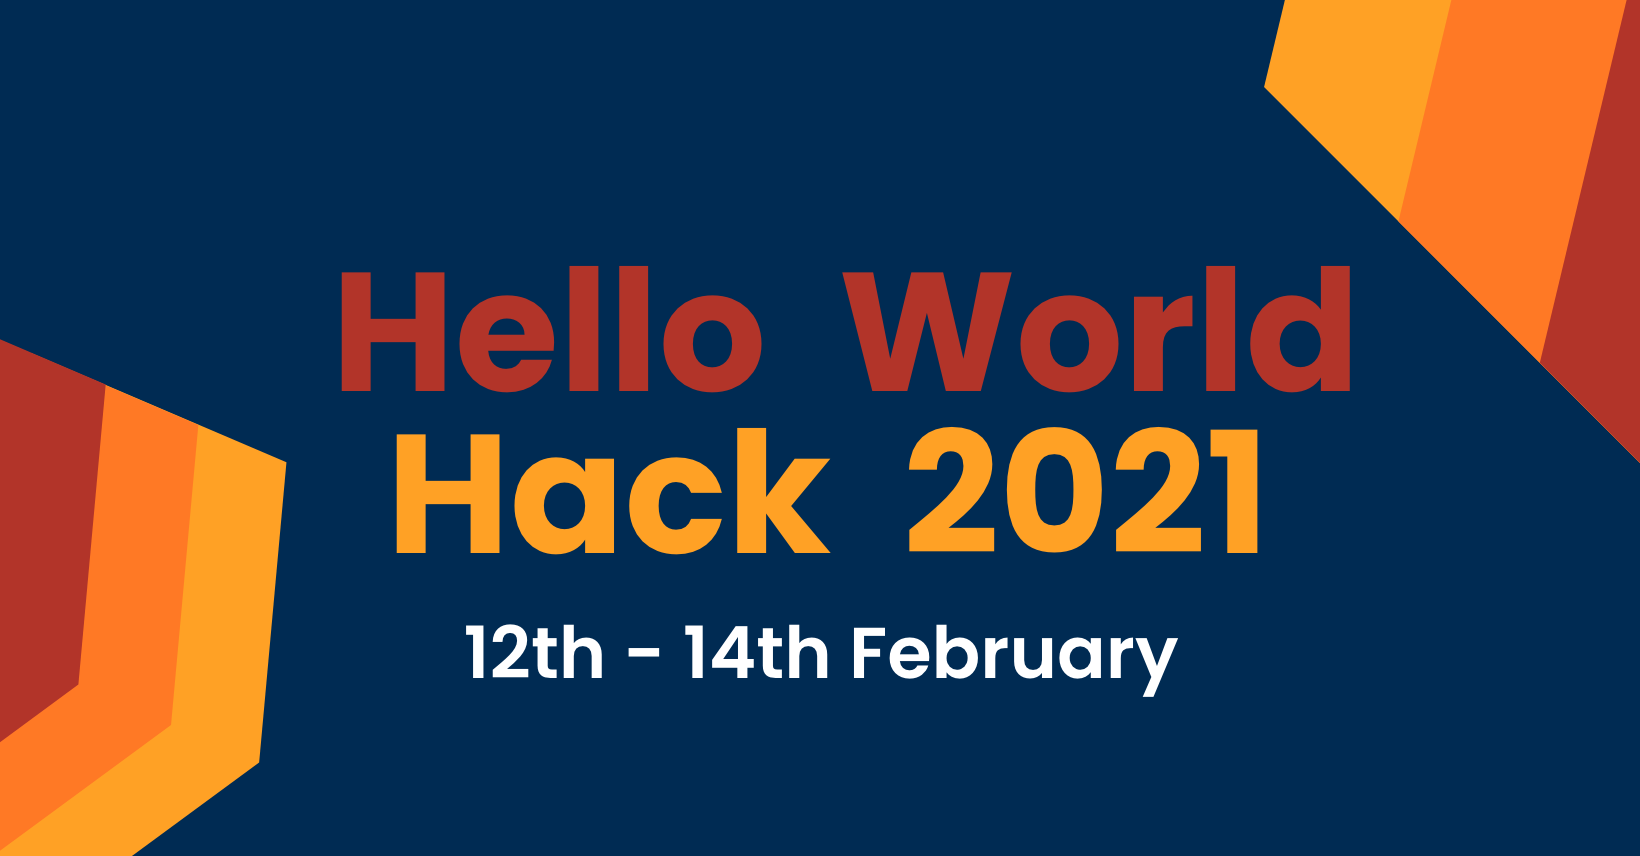 Hello world hack 2021 cover image